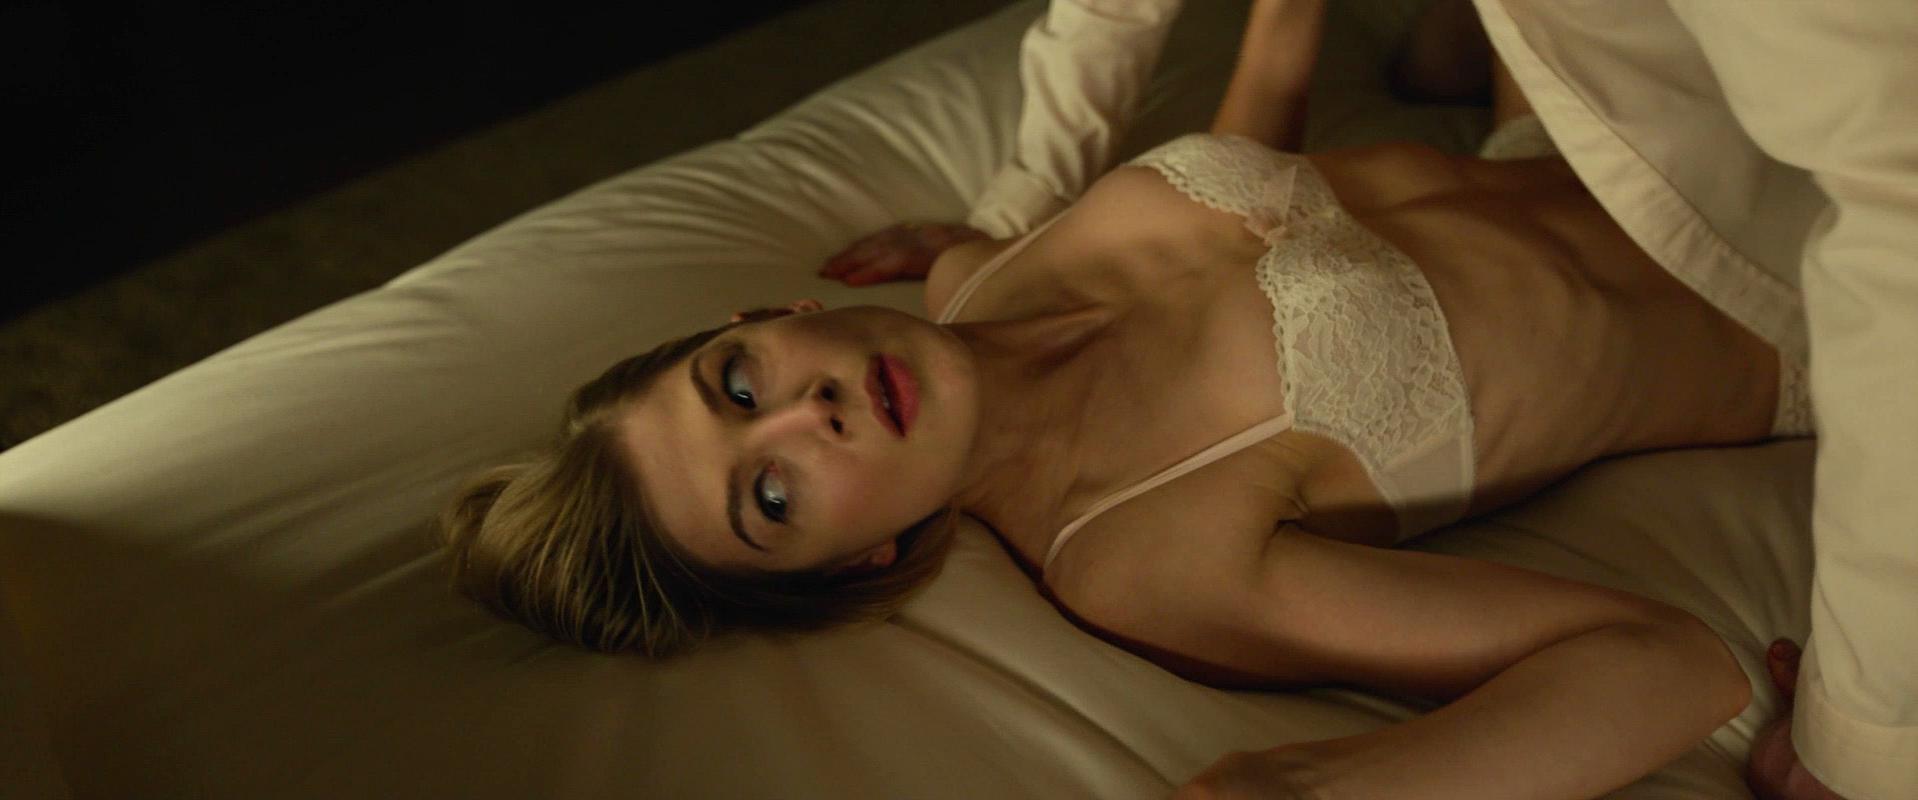 Nude Video Celebs Rosamund Pike Nude Gone Girl 2014 5107